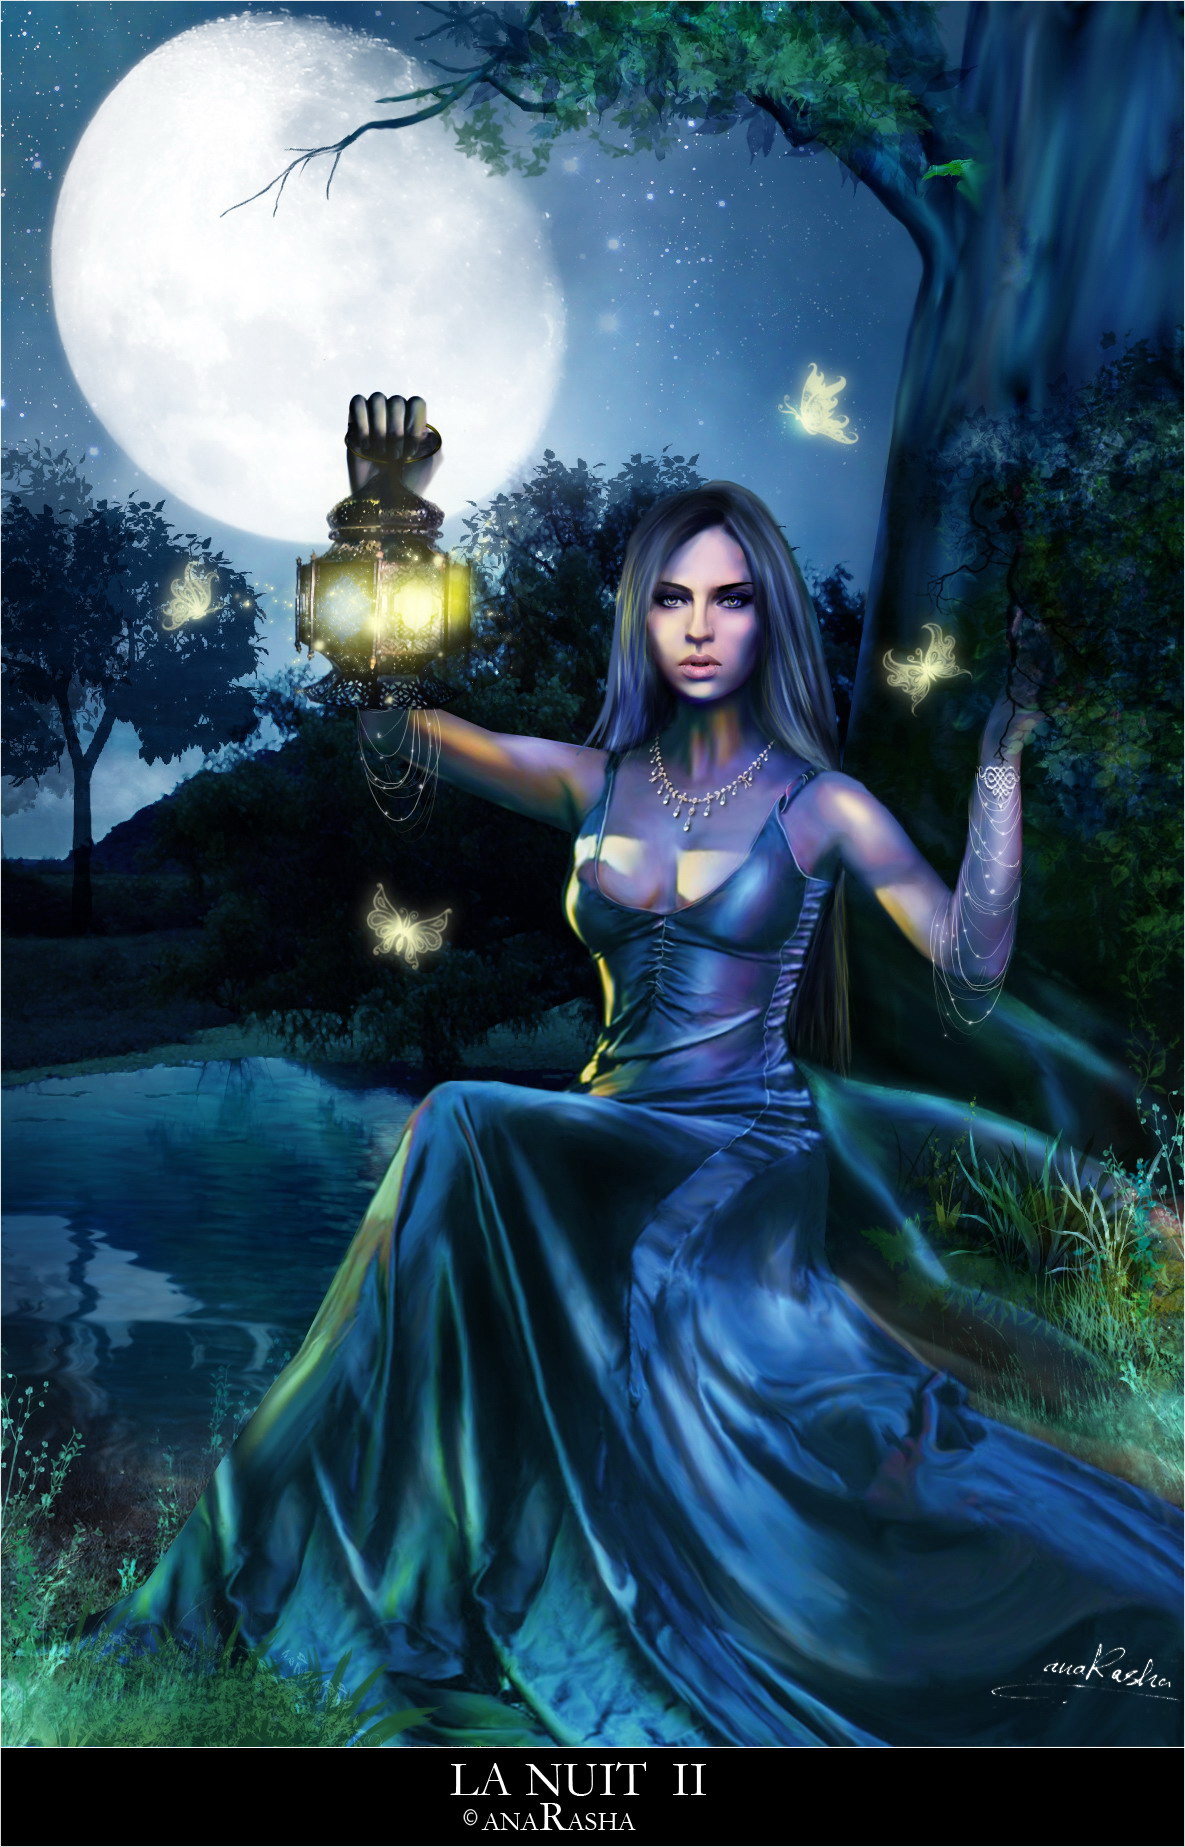 Фото Готическая девушка с фонарем в руке на фоне леса и ночного неба